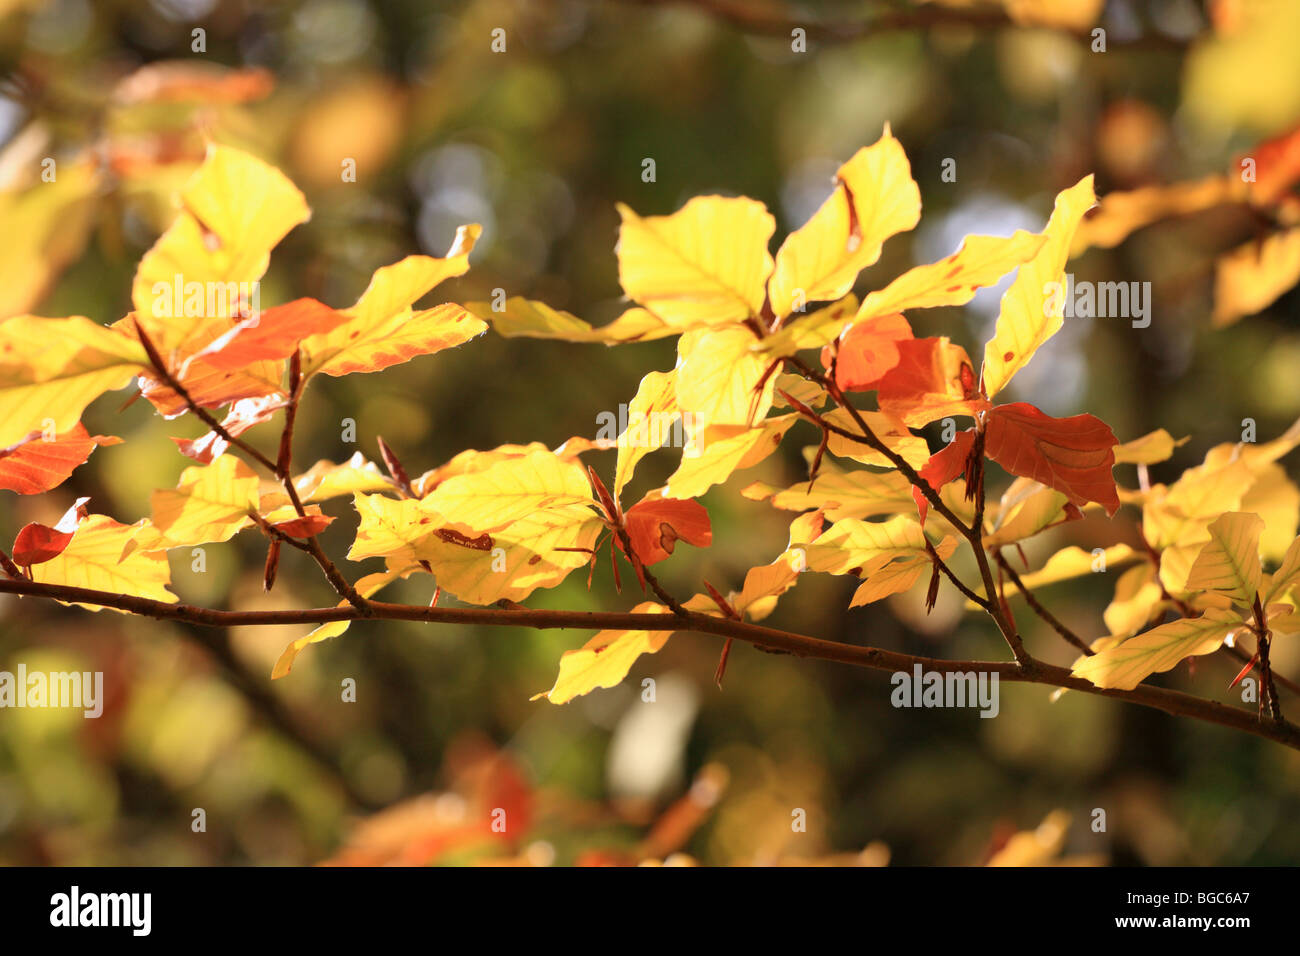 Sunlight filtering through Autumn beech leaves, yellow orange colours. Stock Photo